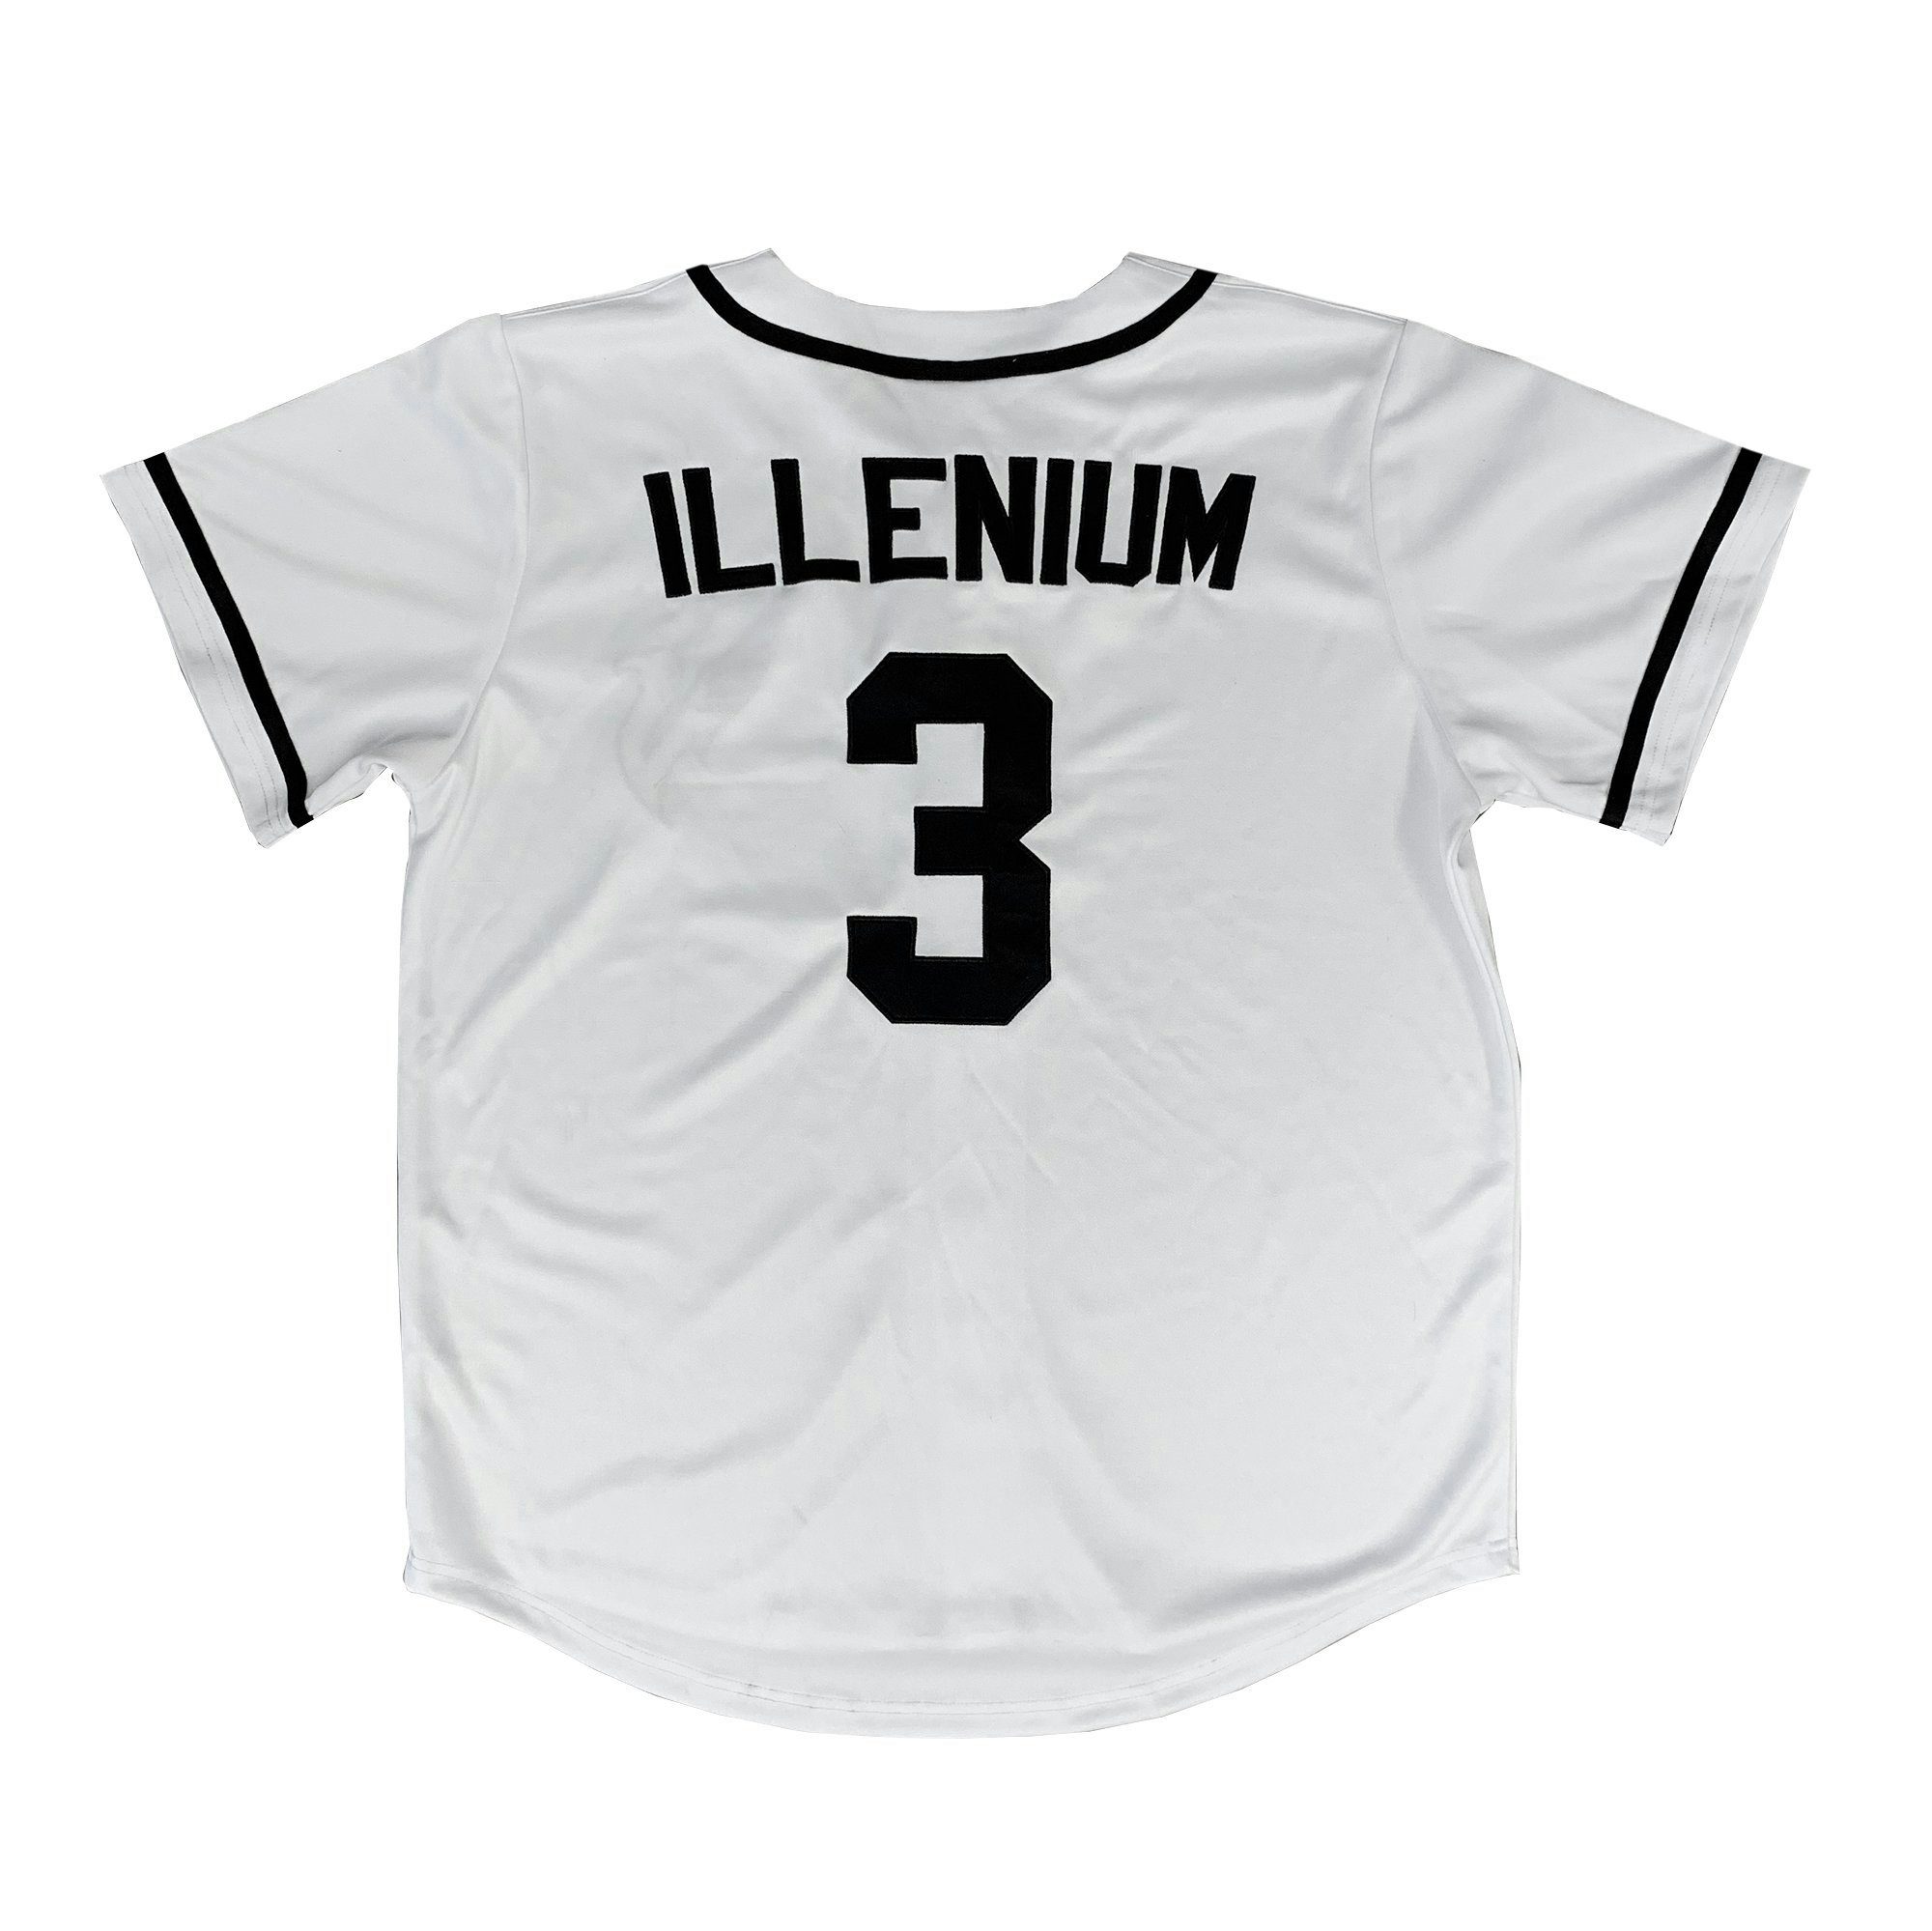 illenium jersey white